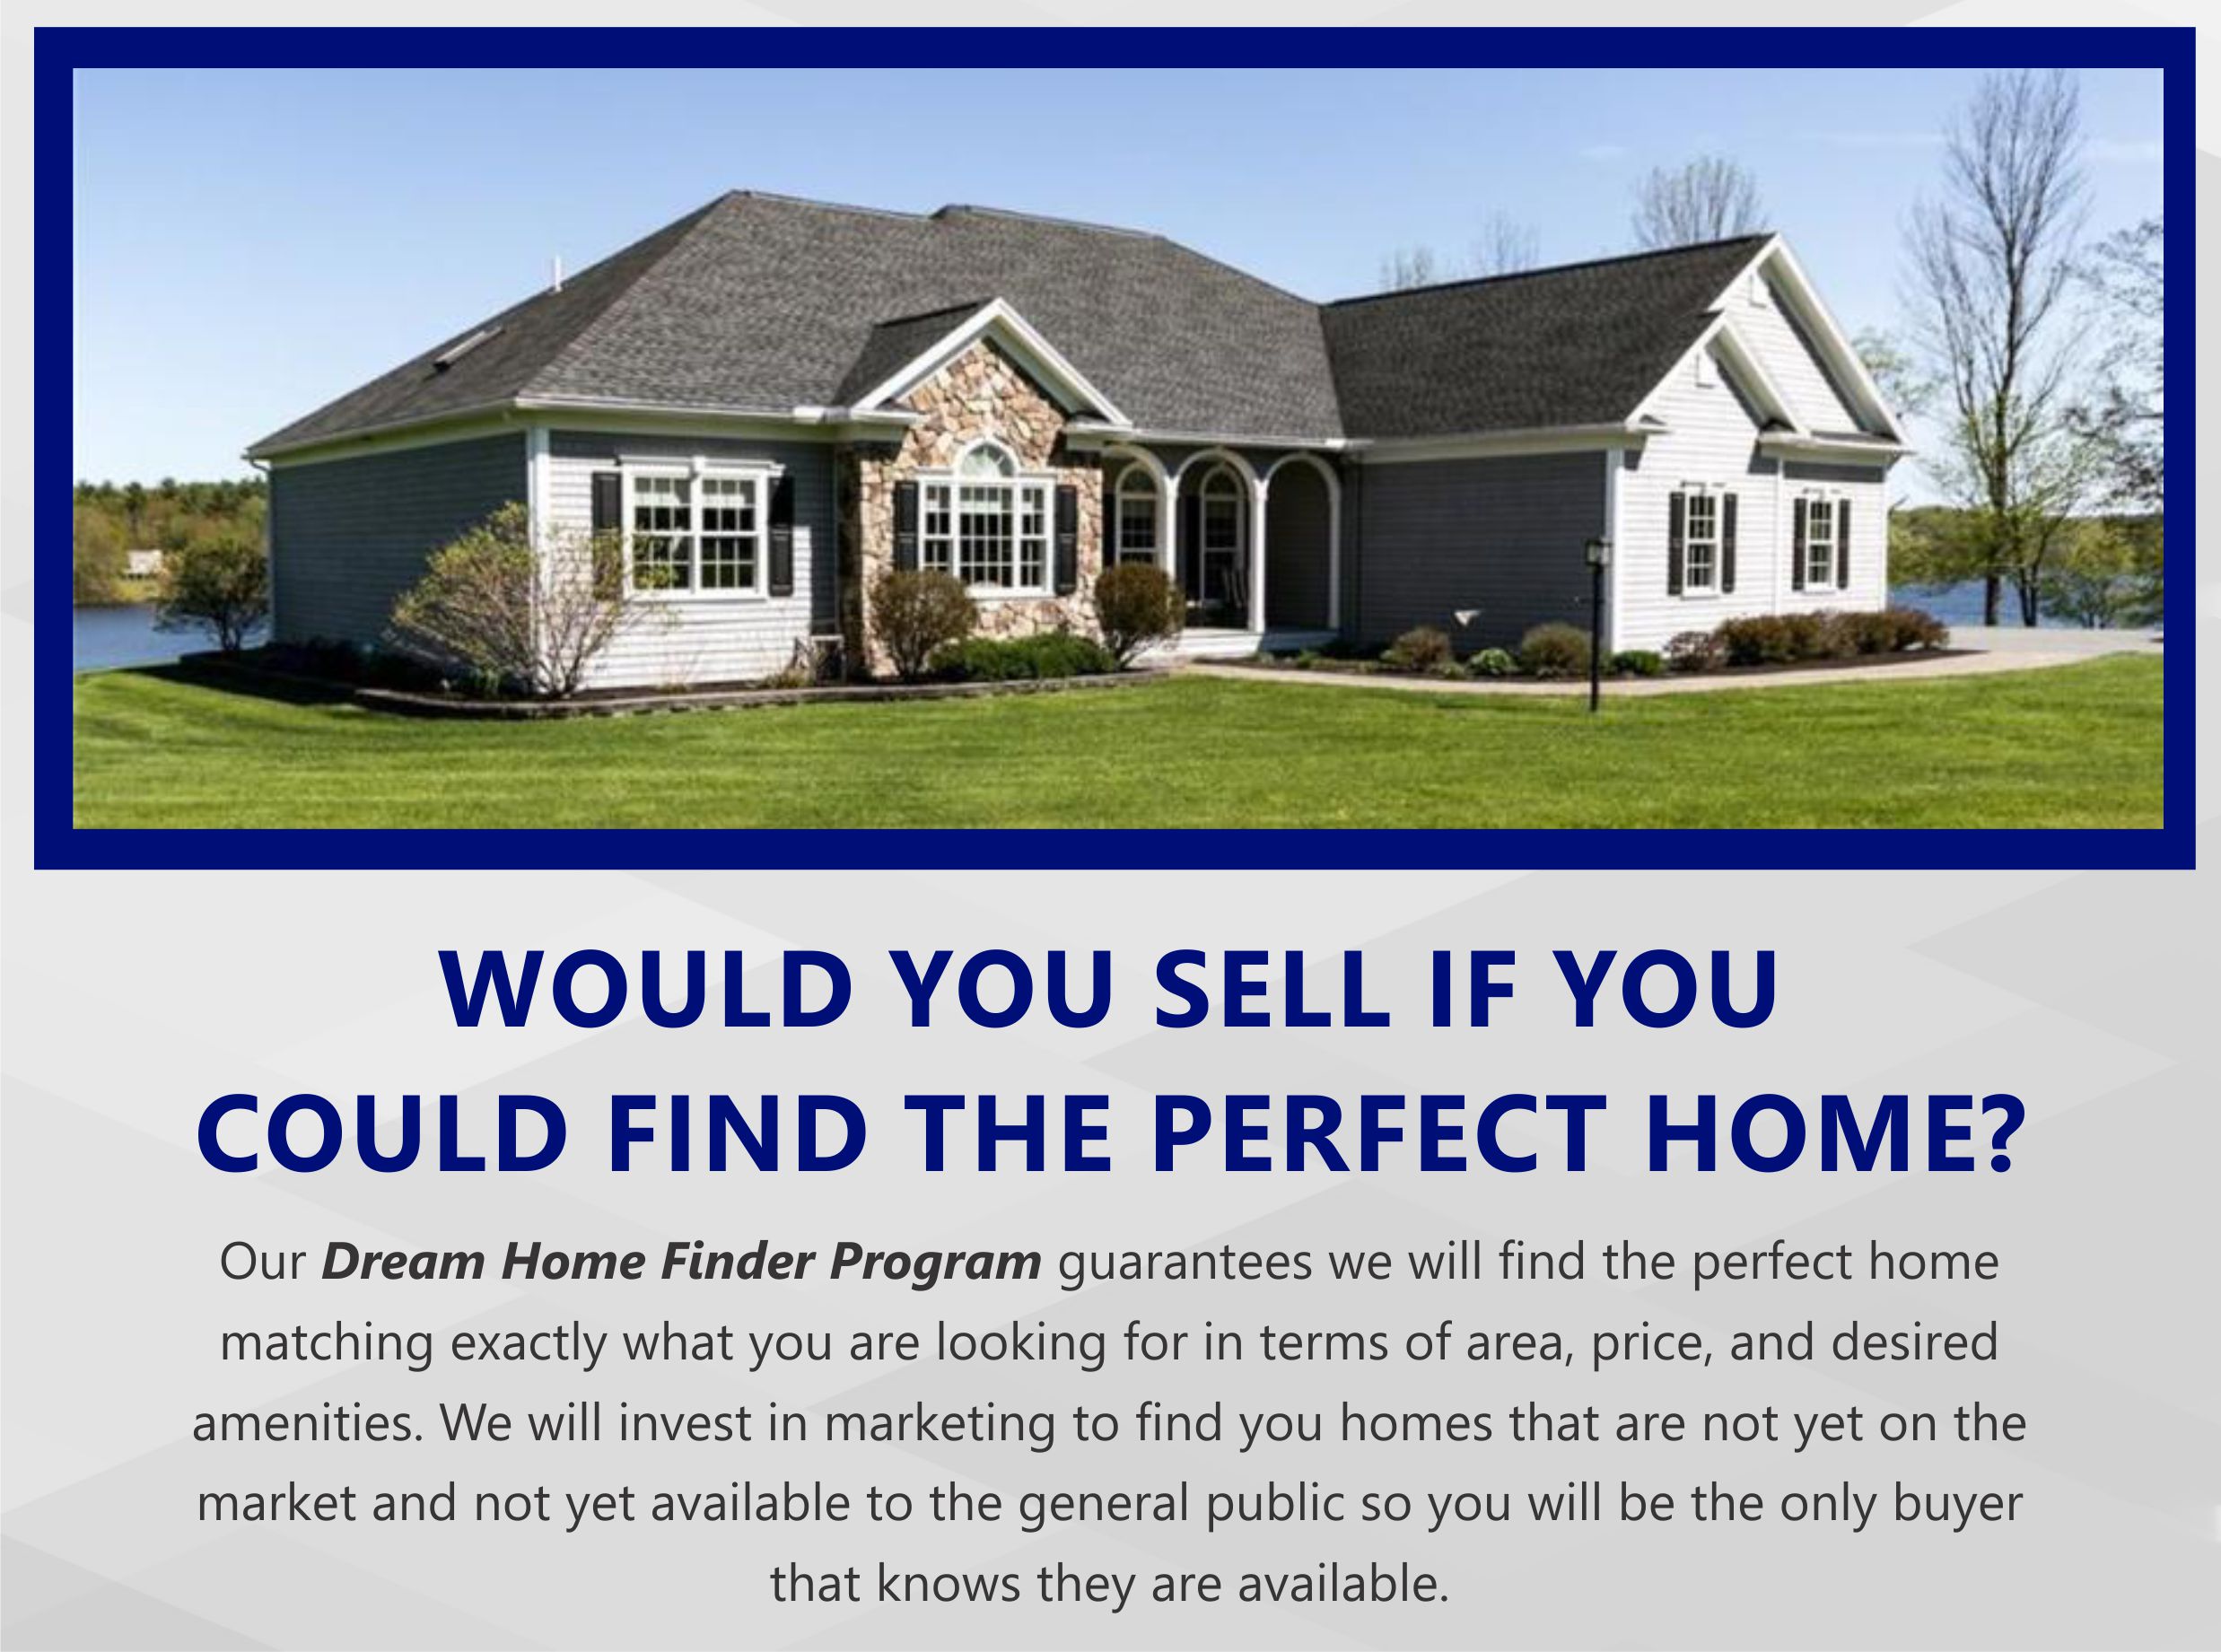 Dream Home Finder Program